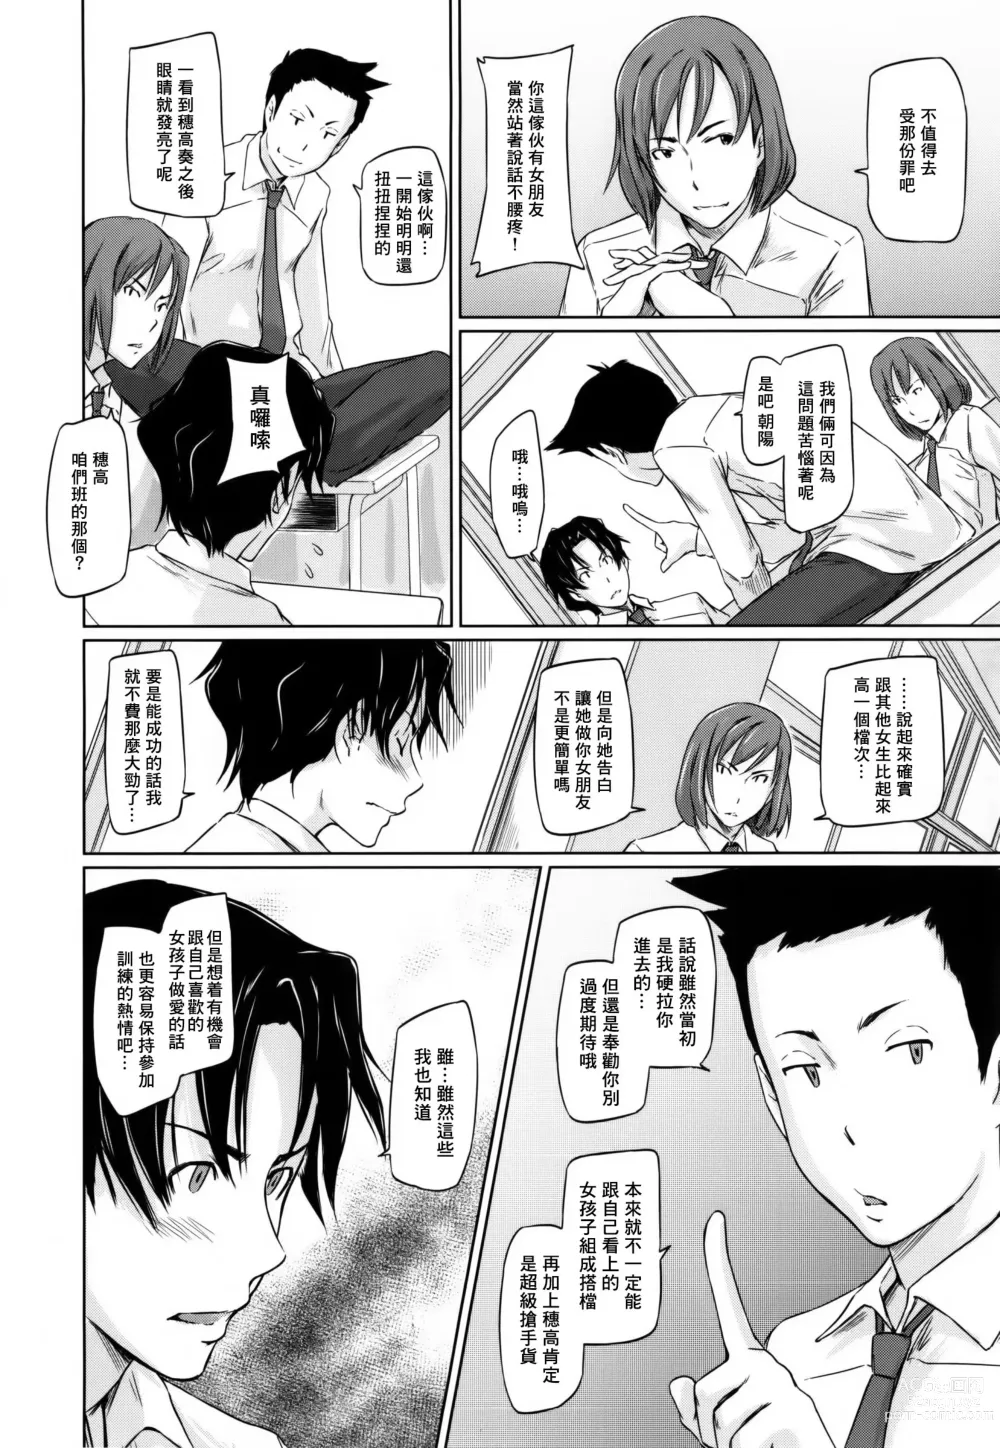 Page 12 of manga Suki ni Nattara Icchokusen!